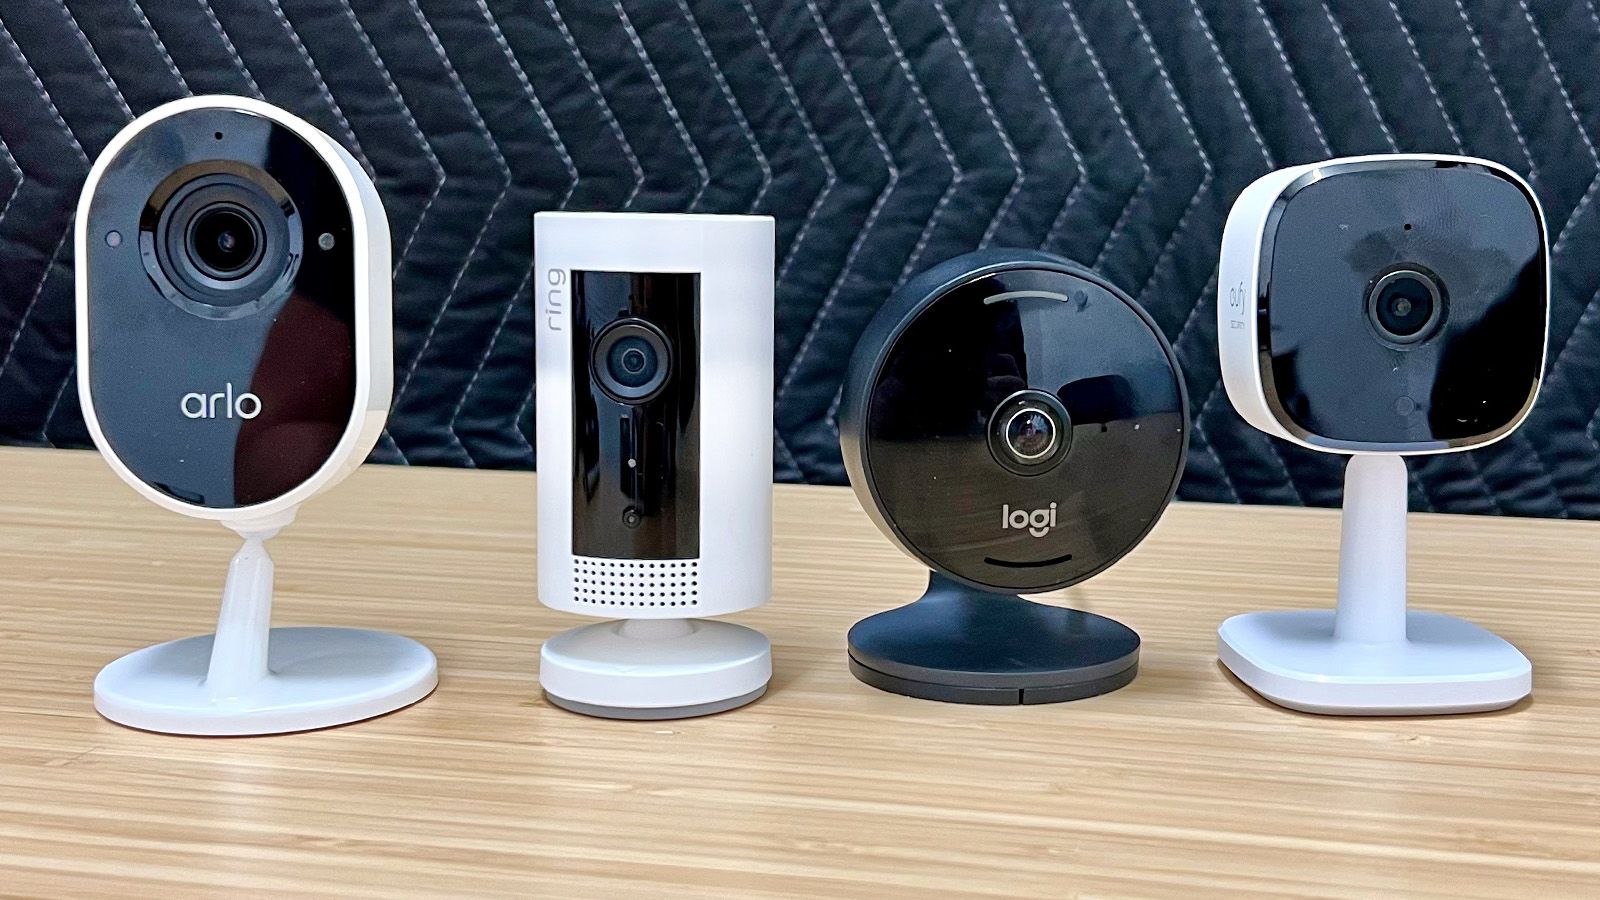 outdoor surveillance camera system no wifi no internet - Best Buy